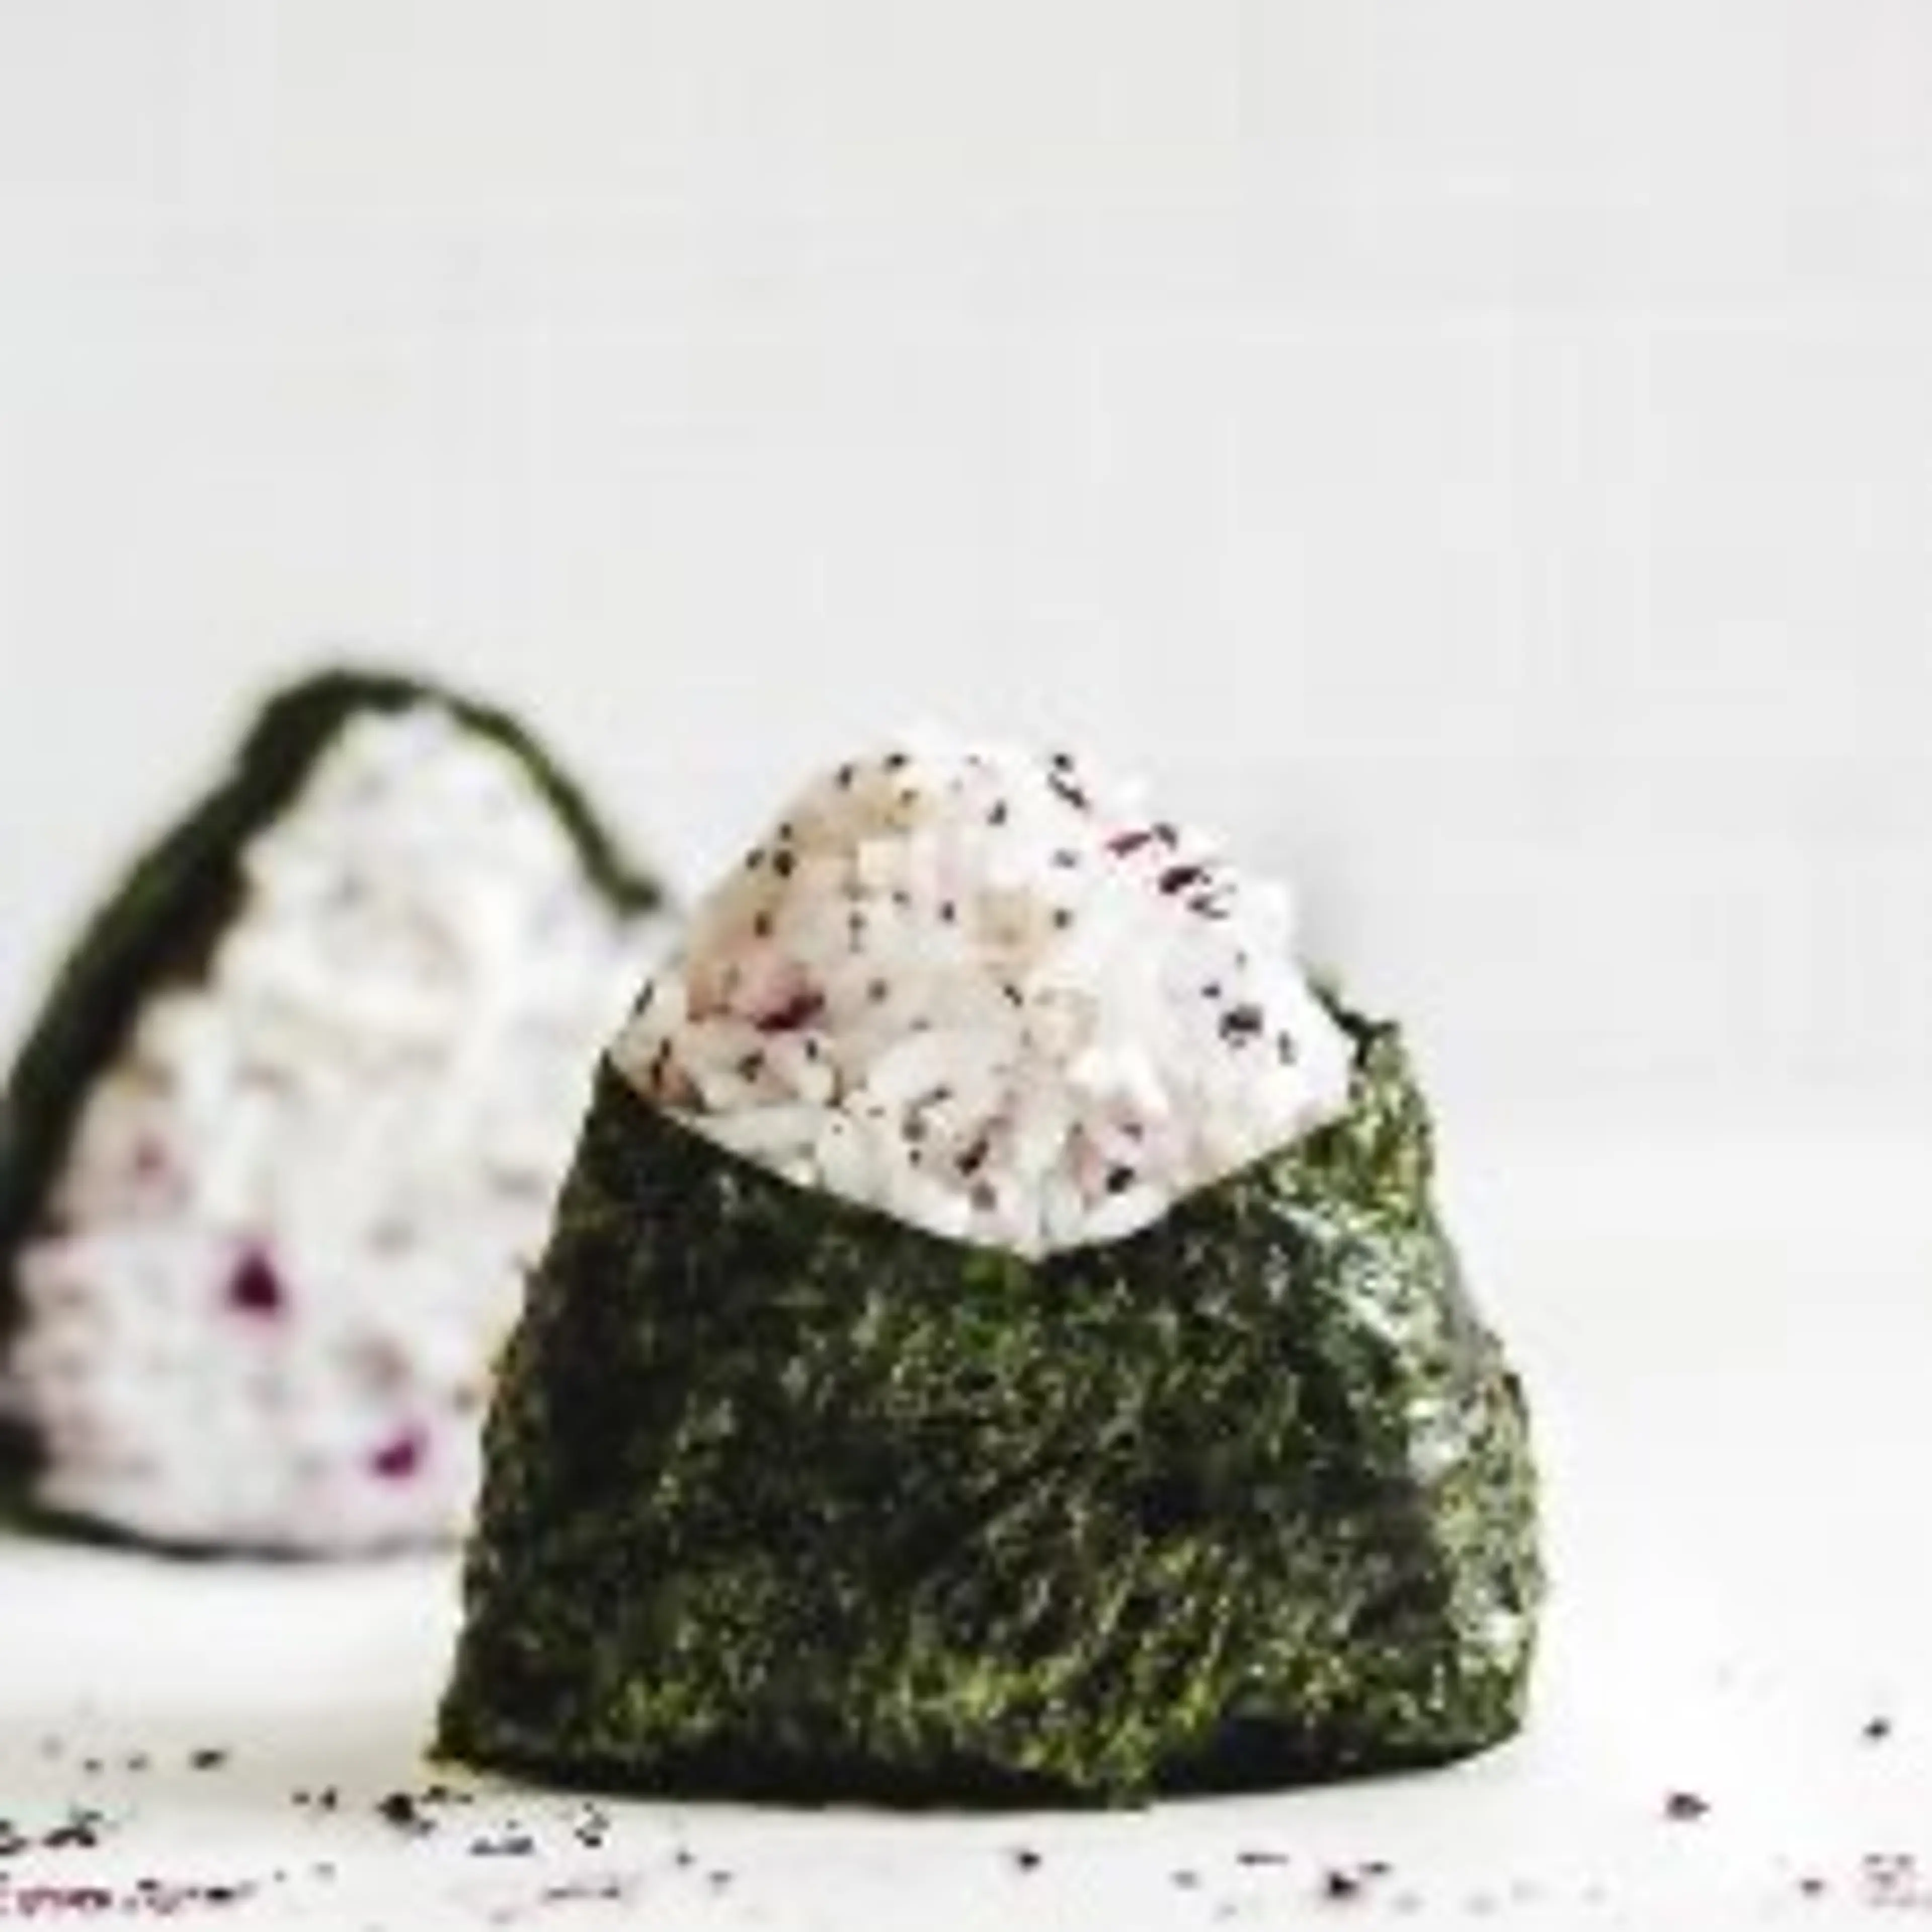 How to Make Onigiri (Japanese Rice Balls) | Ultimate Guide